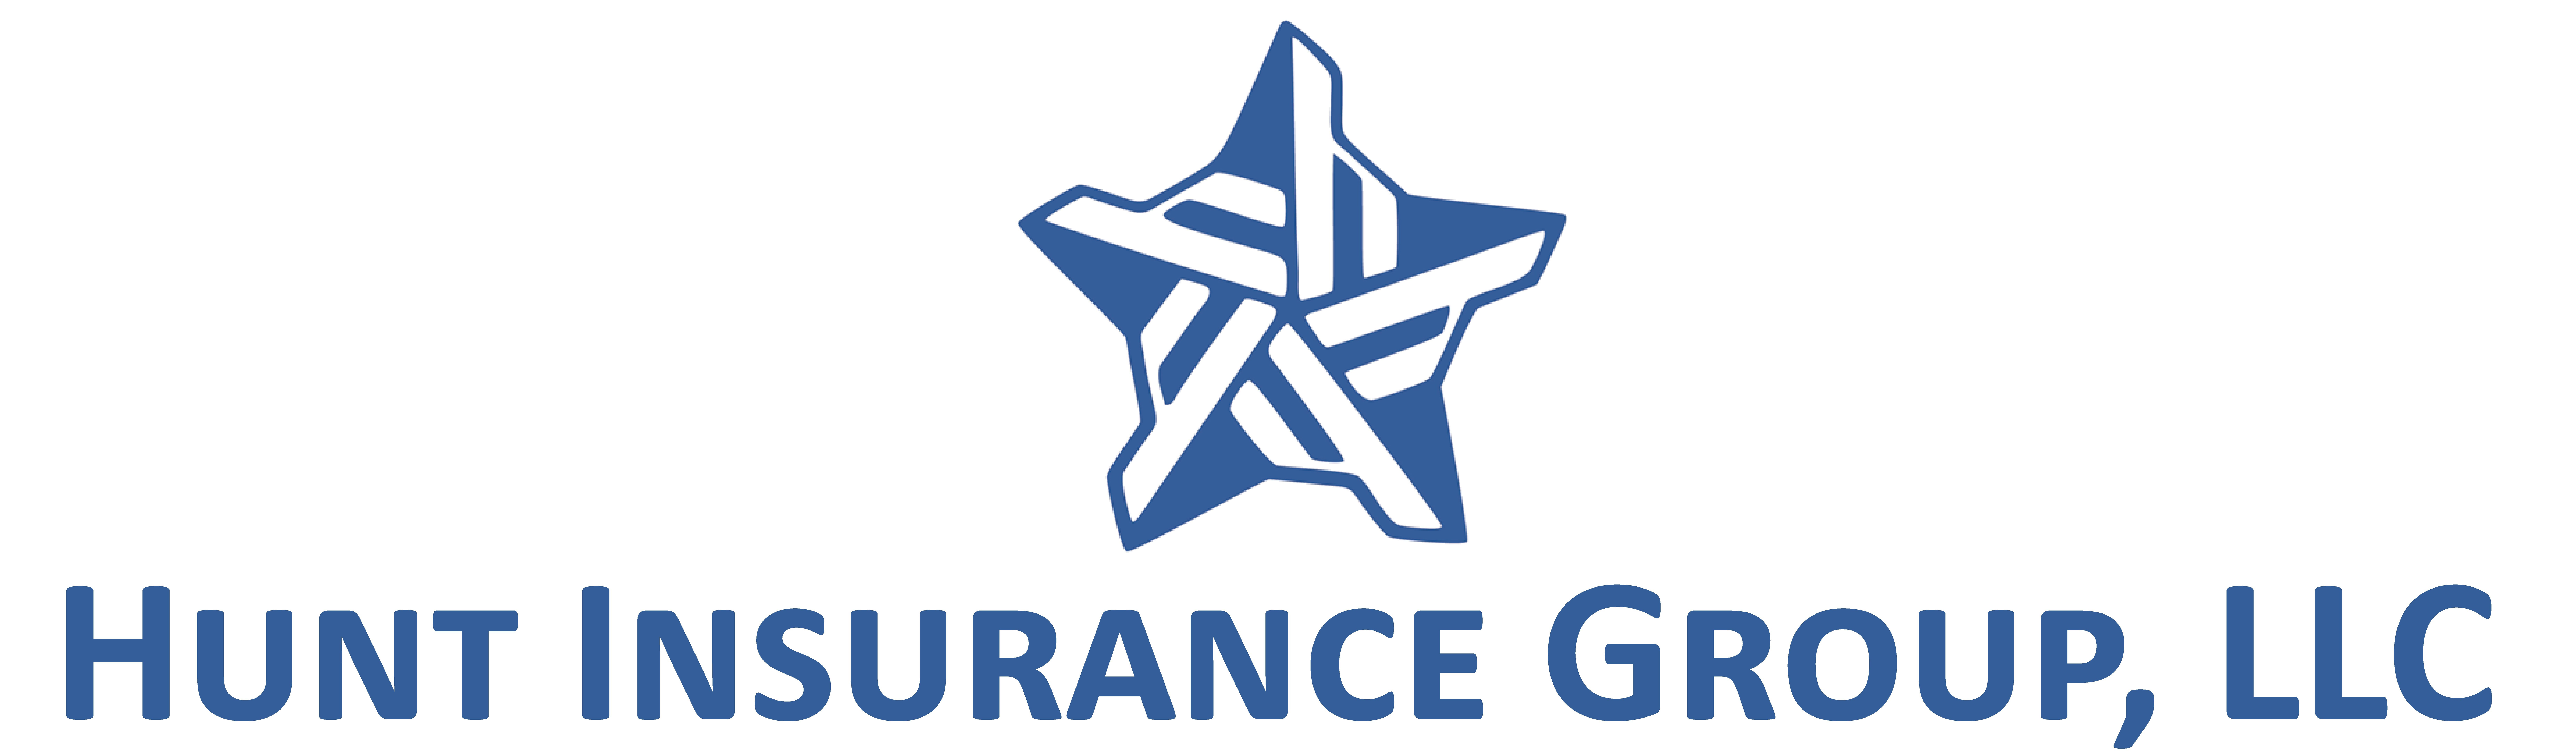 Hunt Insurance Group